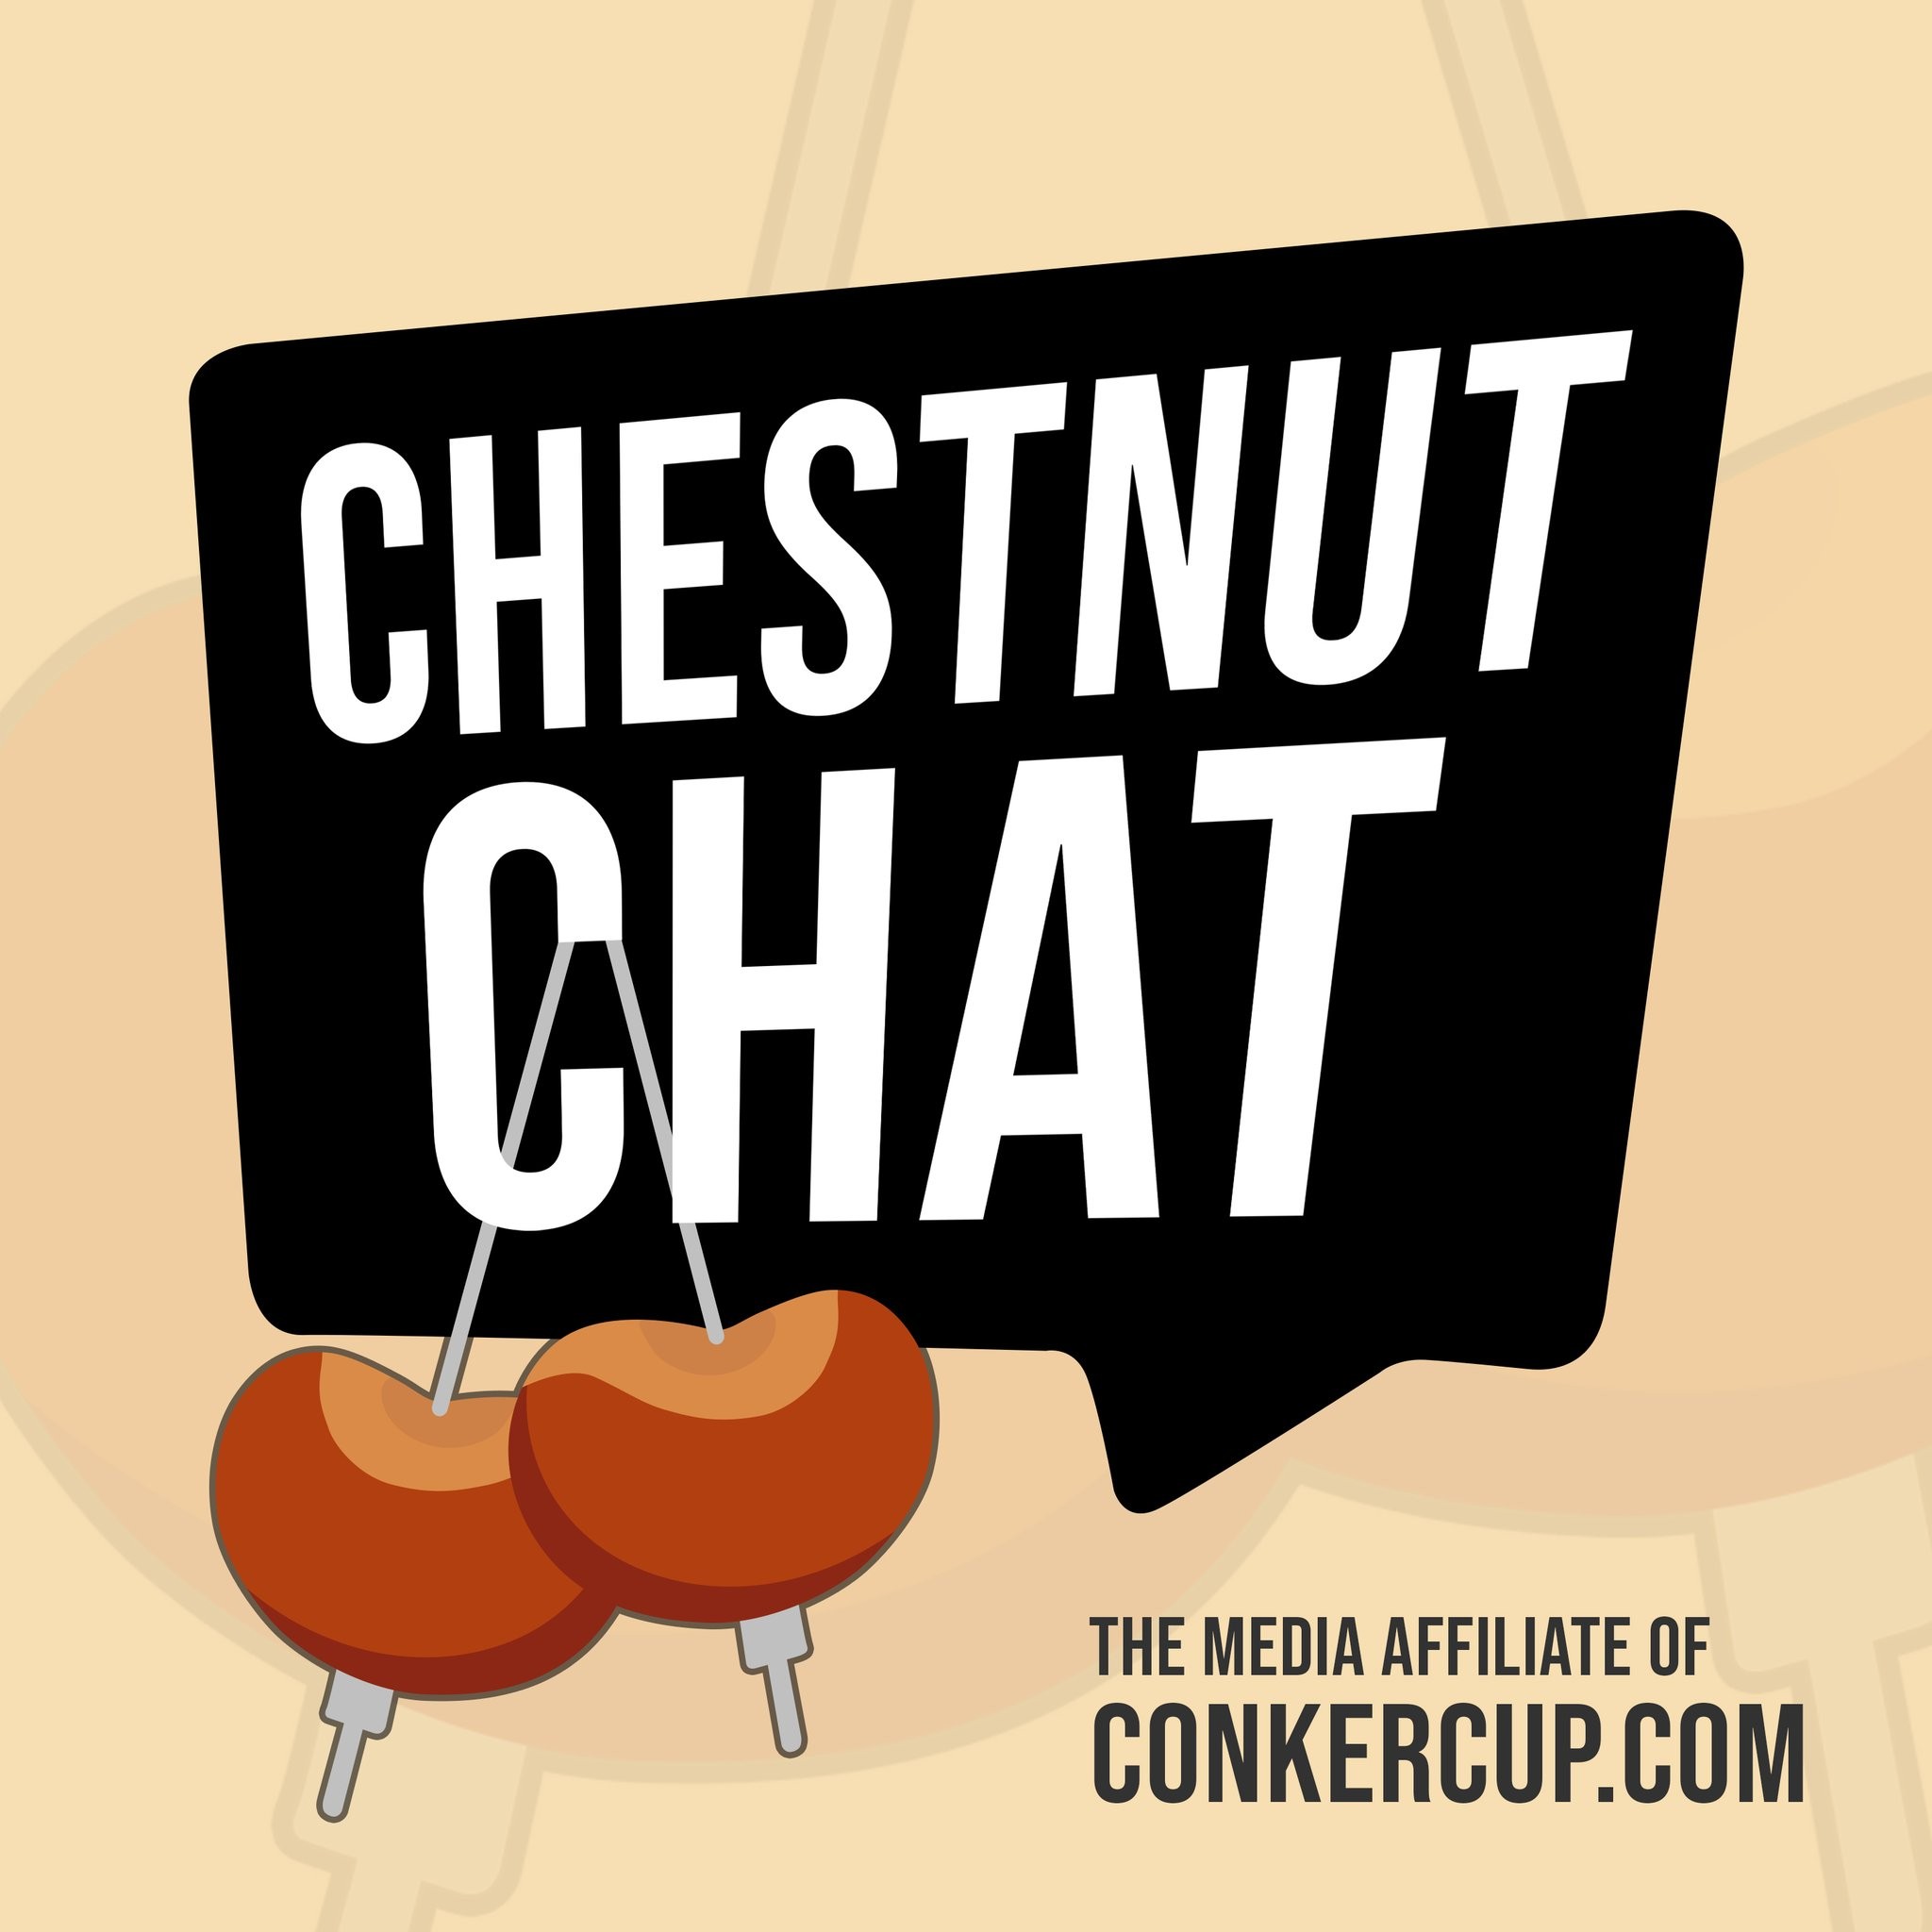 Chestnut Chat